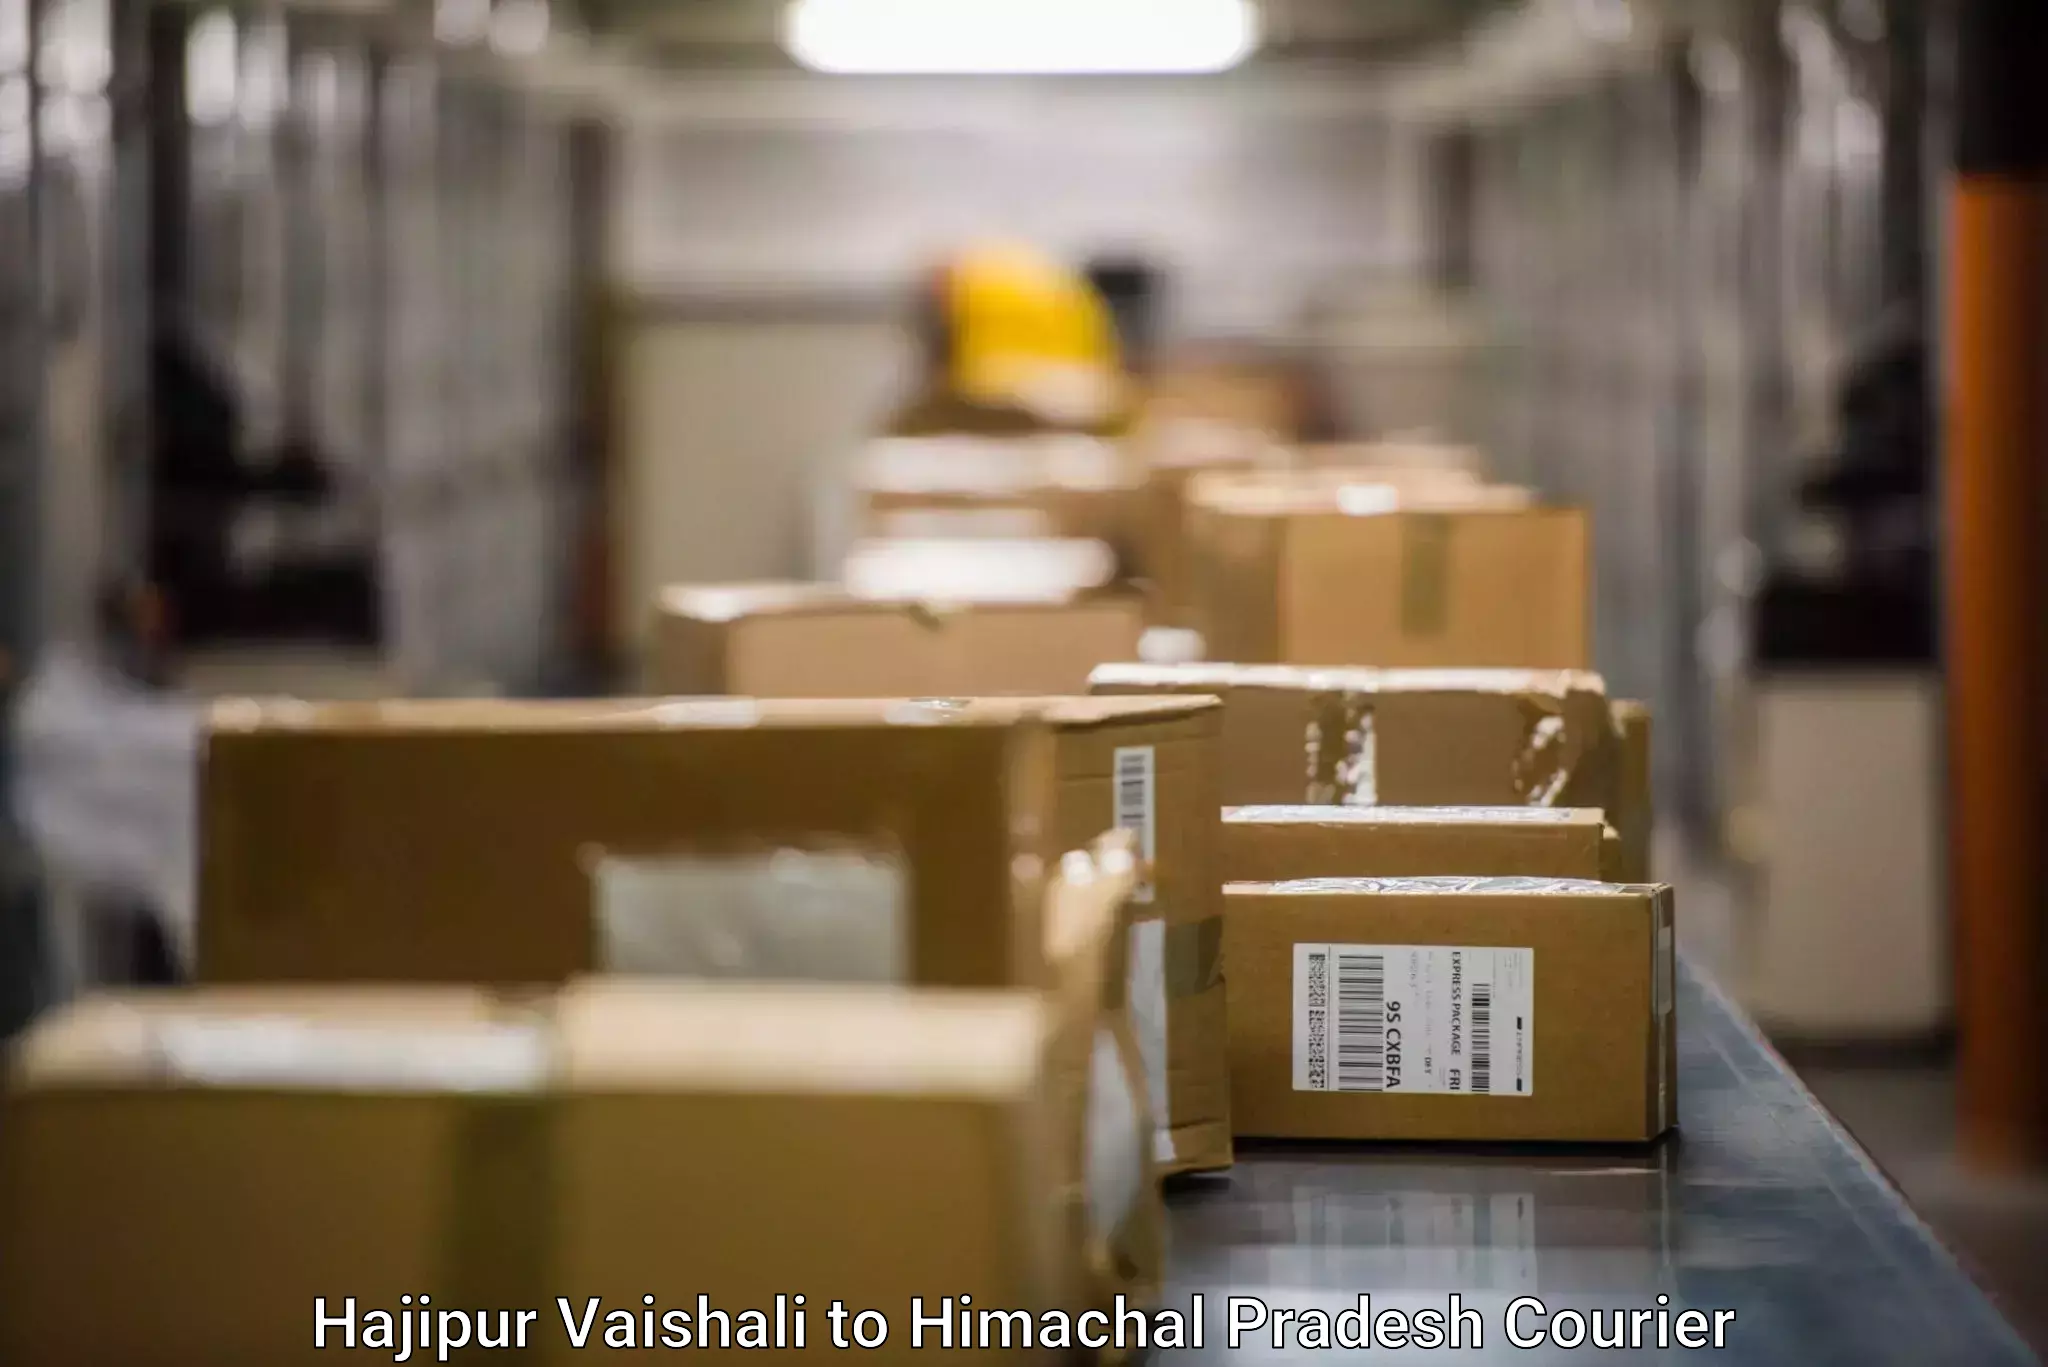 Package delivery network Hajipur Vaishali to Banjar